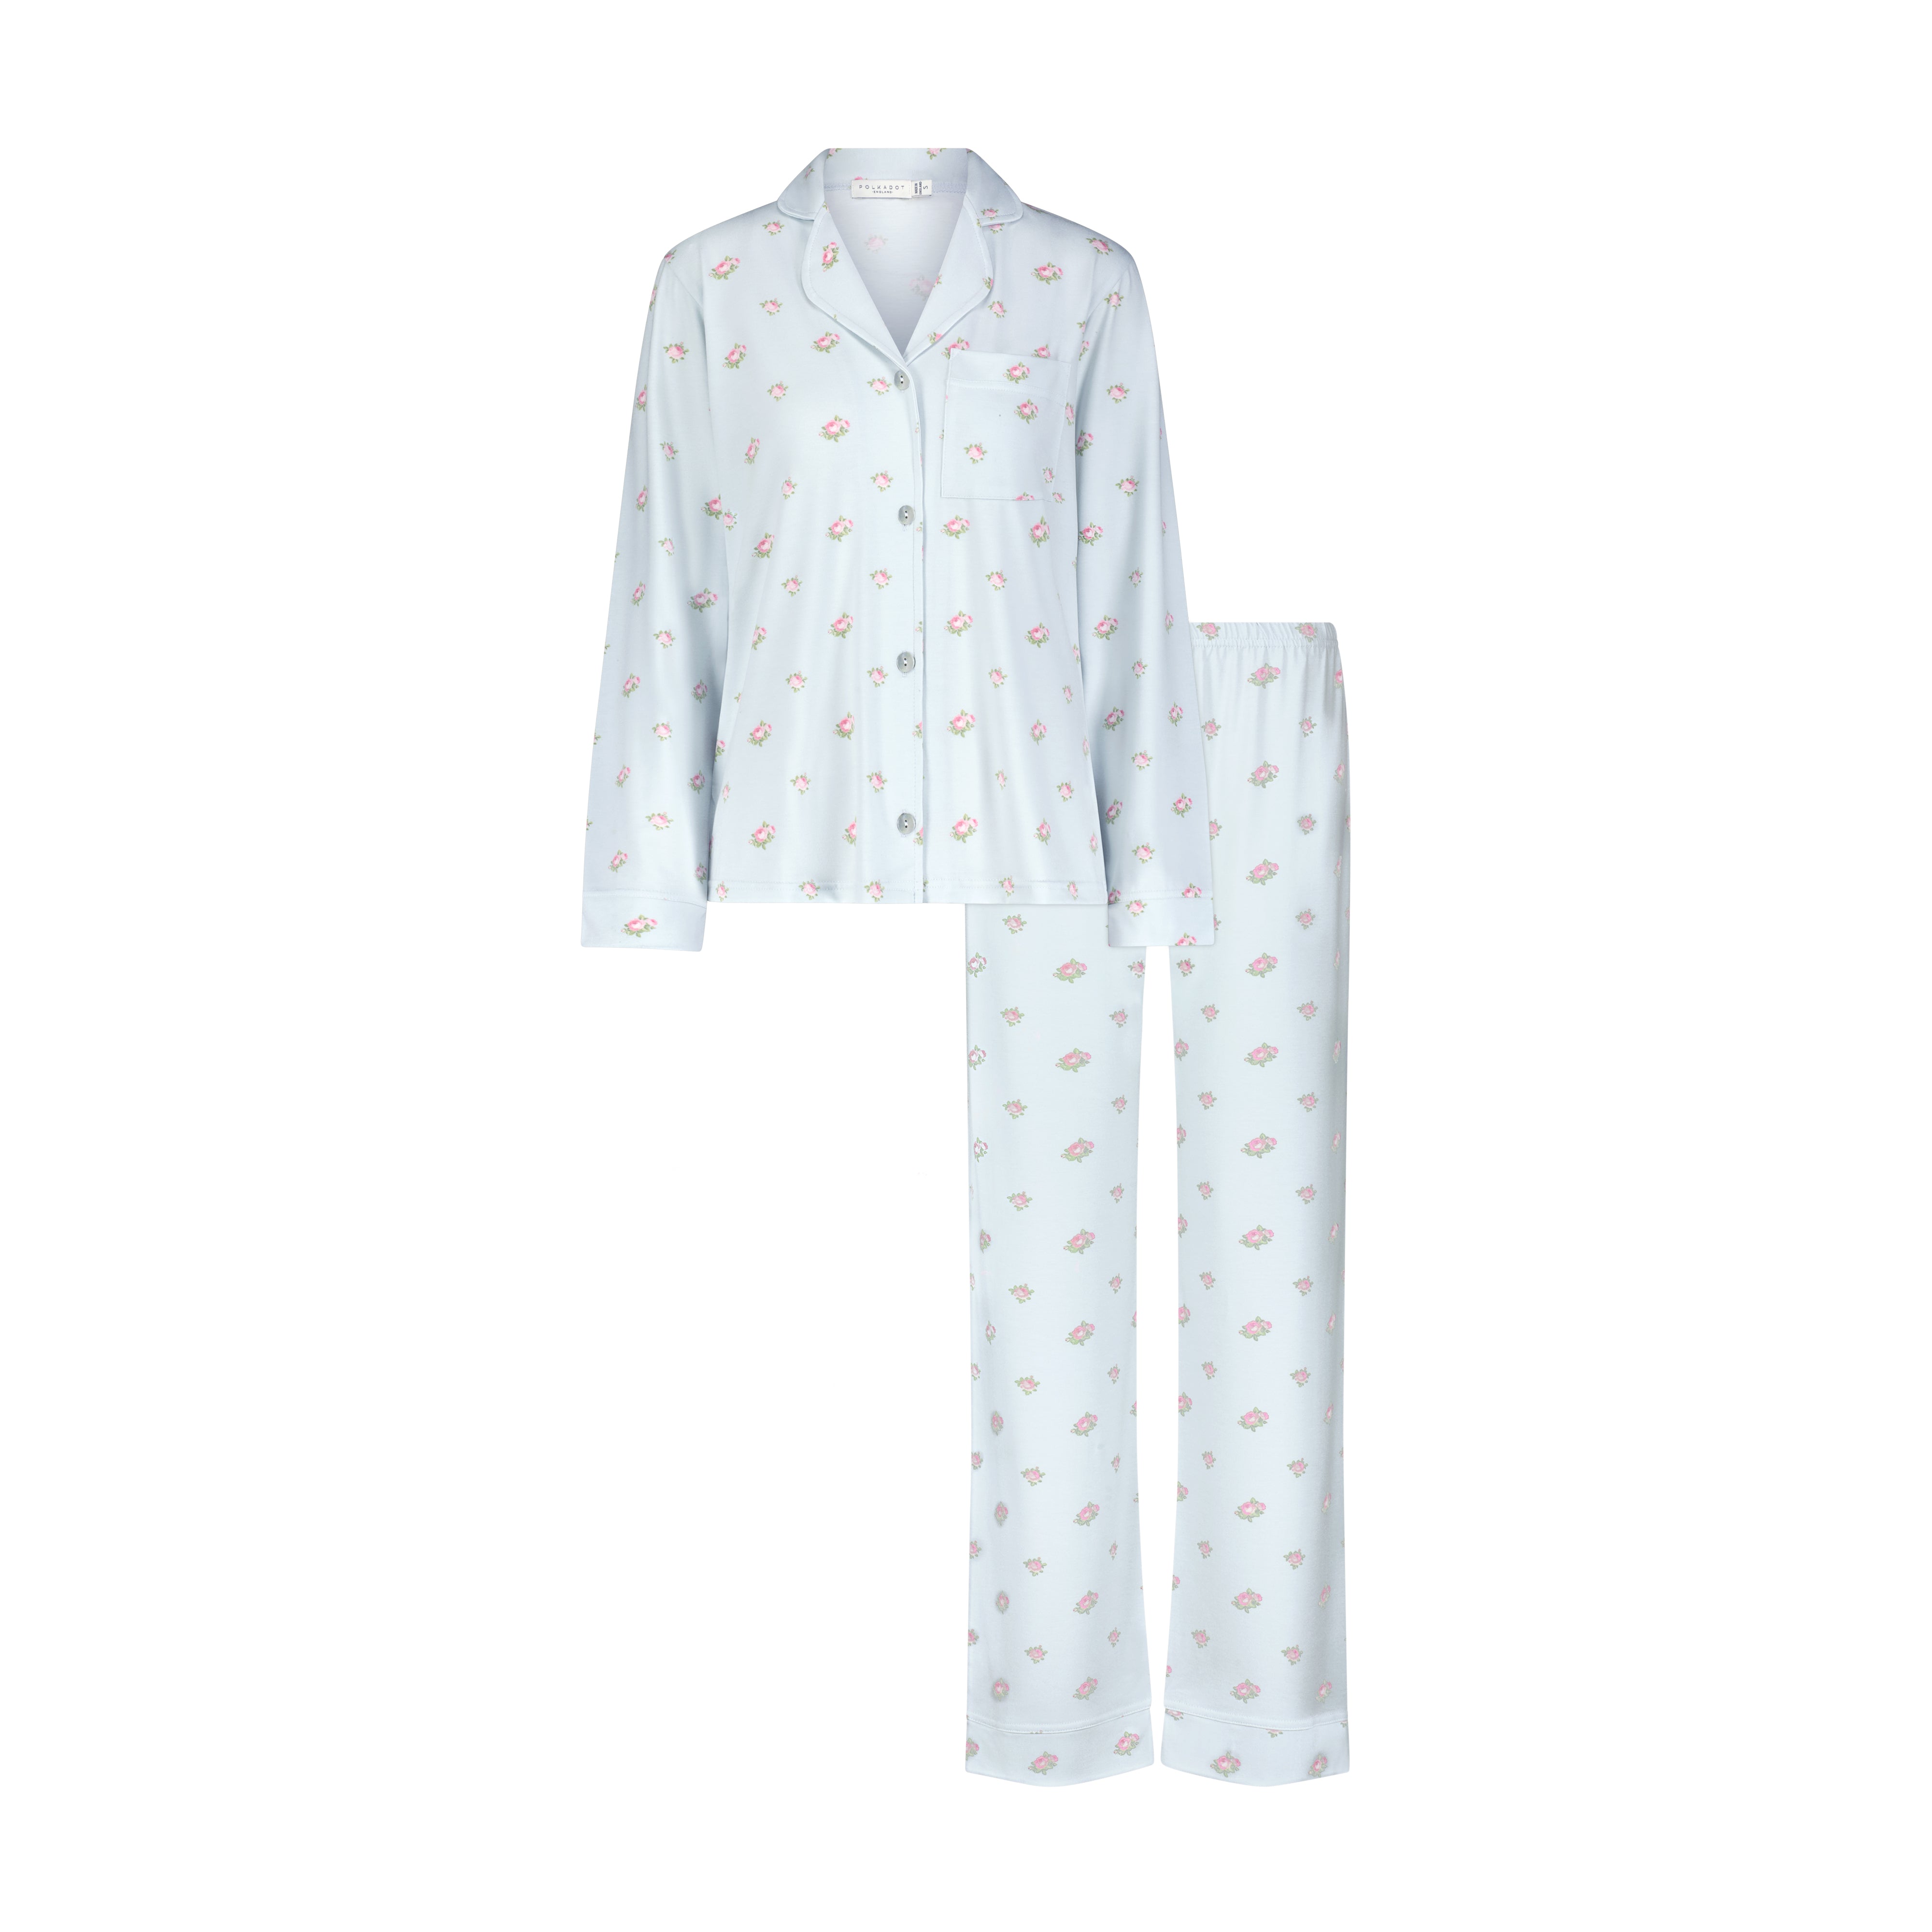 CHARLEY Pajama Set in Blue Ciel Rose Print